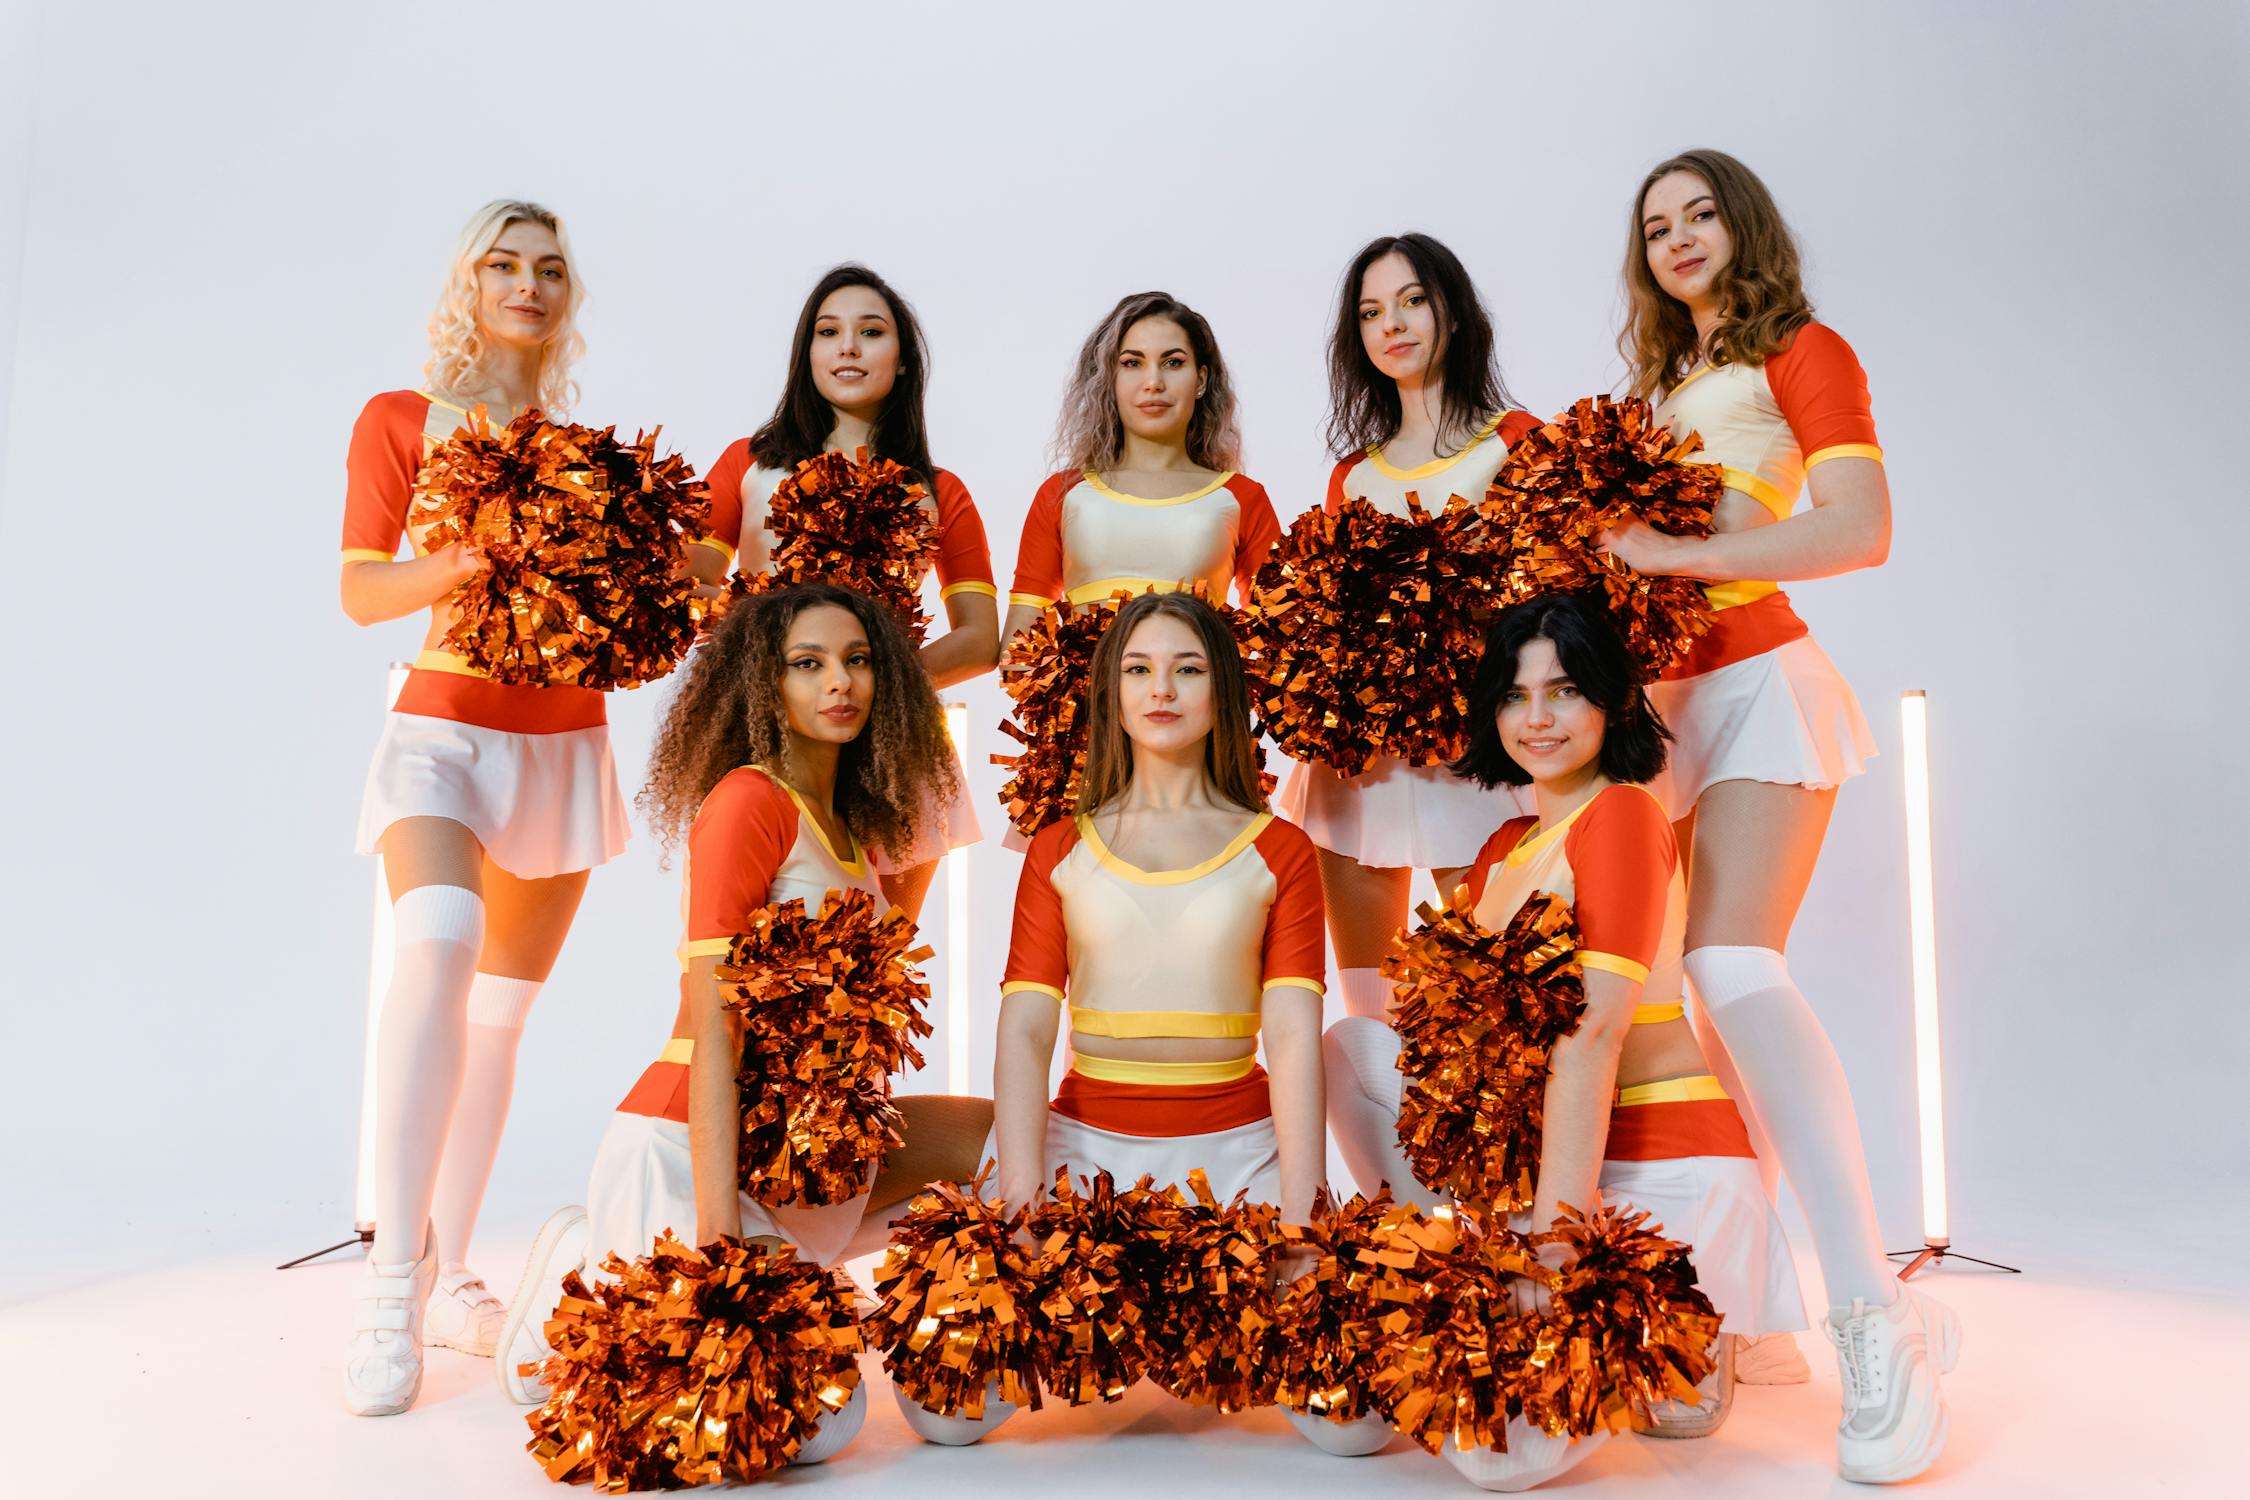 Cheerleaders in Orange Uniforms · Free Stock Photo